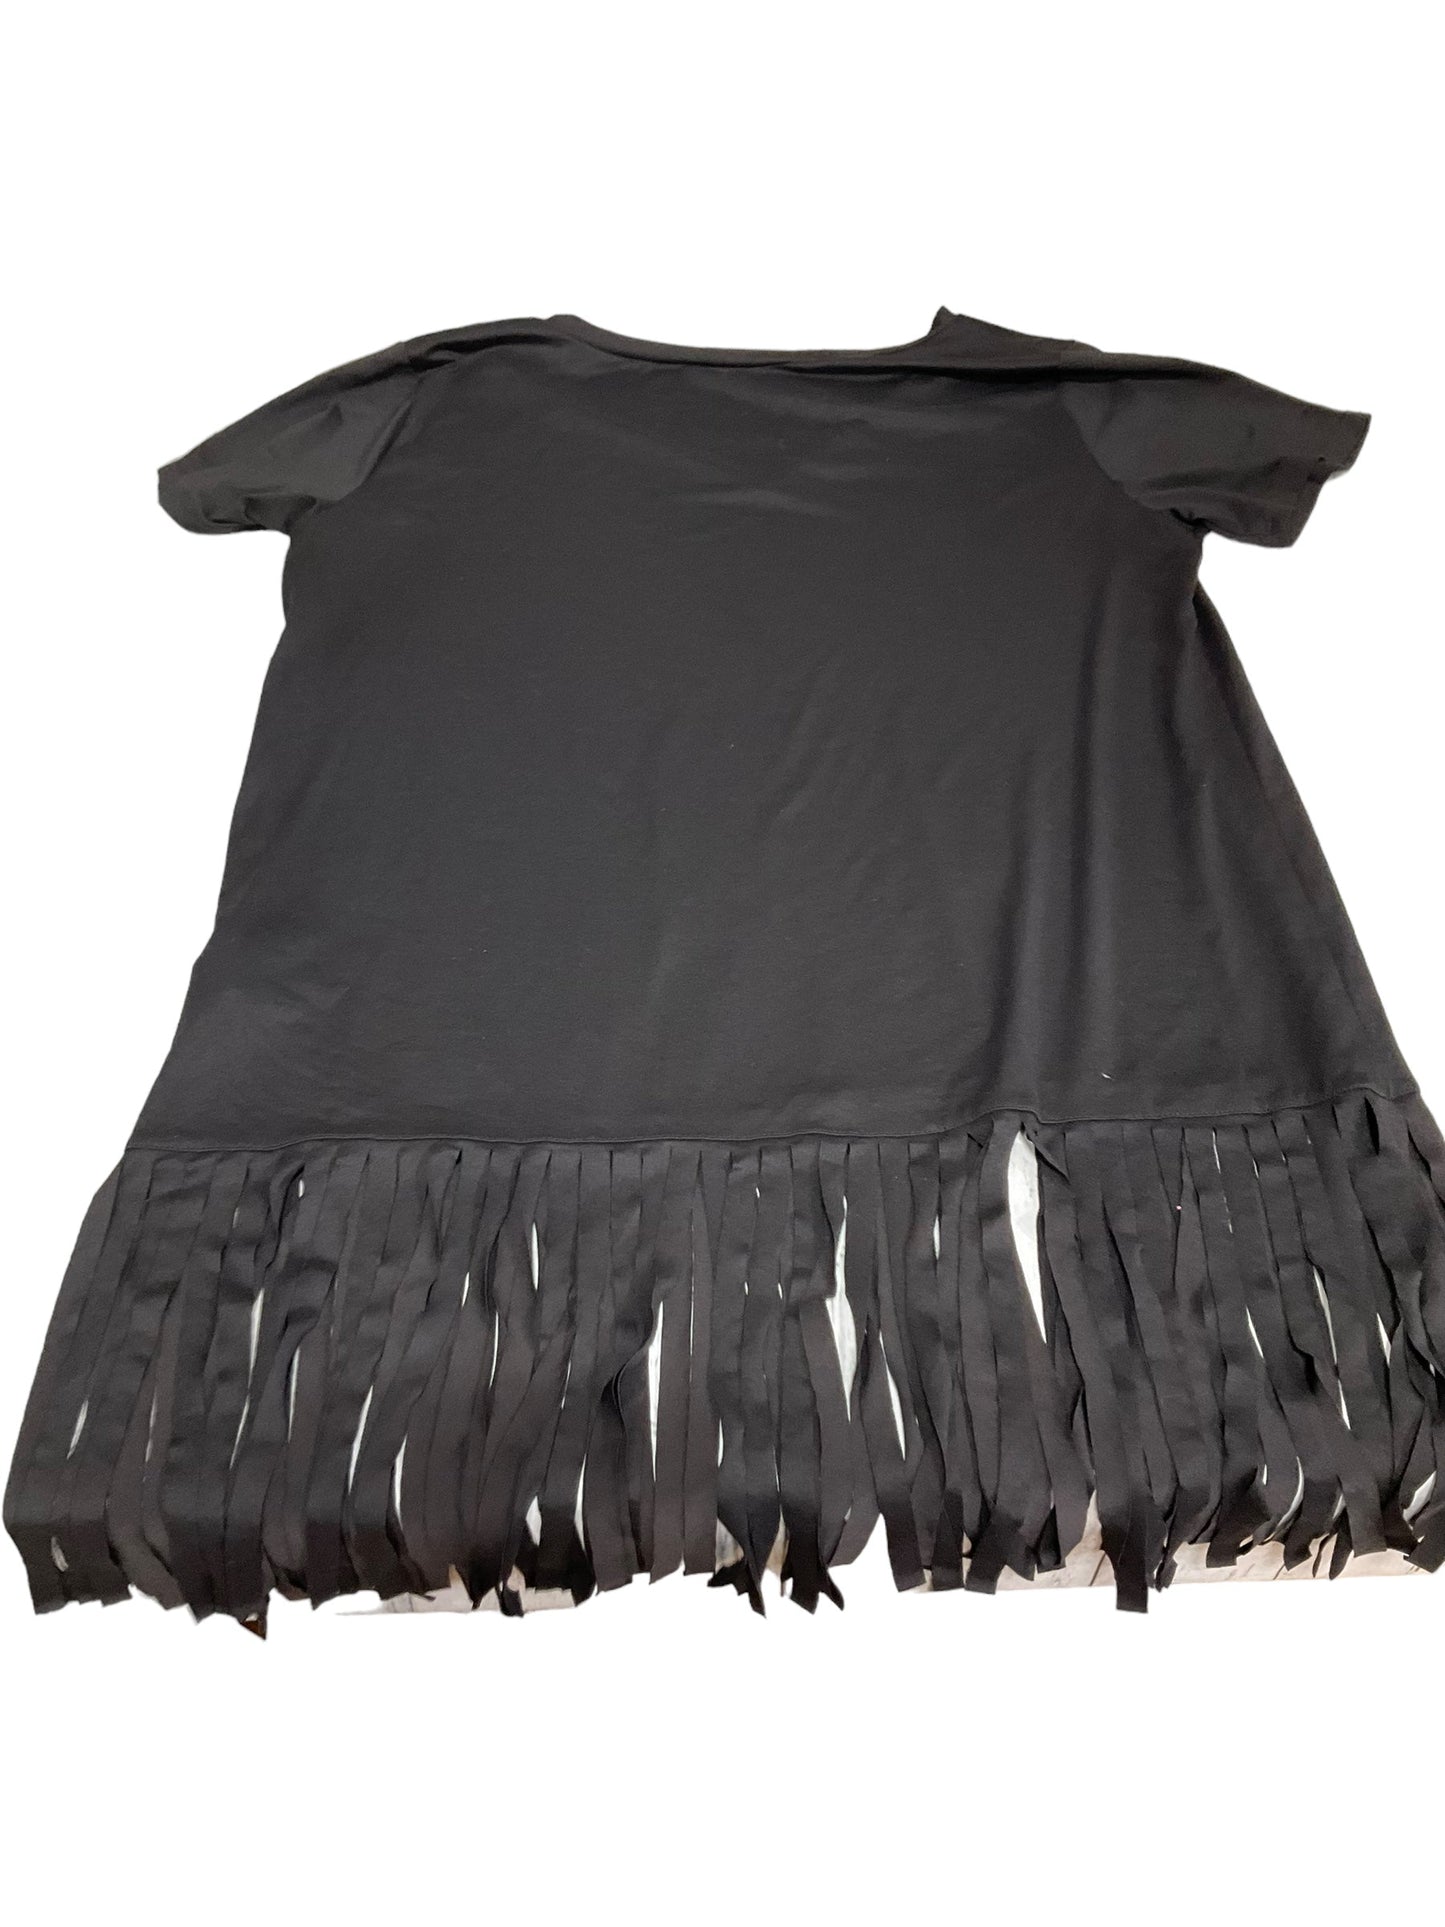 Black Top Short Sleeve Basic Clothes Mentor, Size Xl